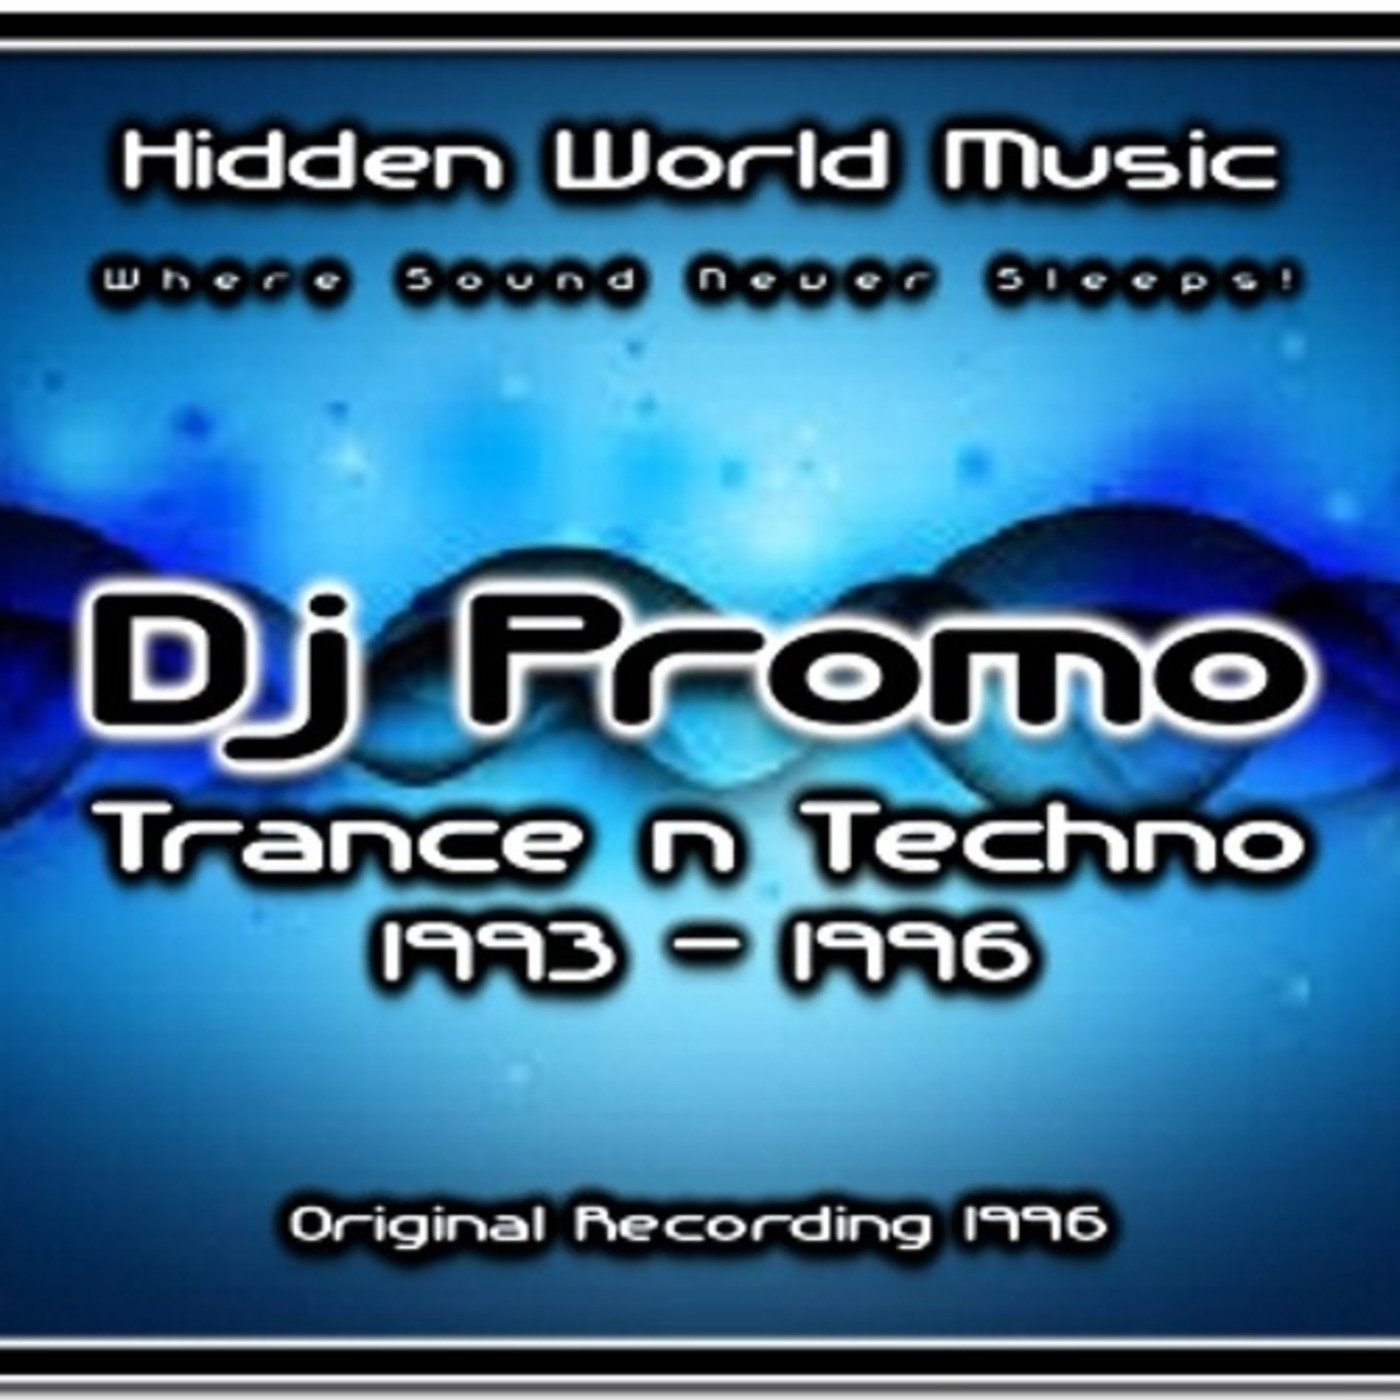 Dj Promo - Trance n Techno Mix - (1993 - 1996)